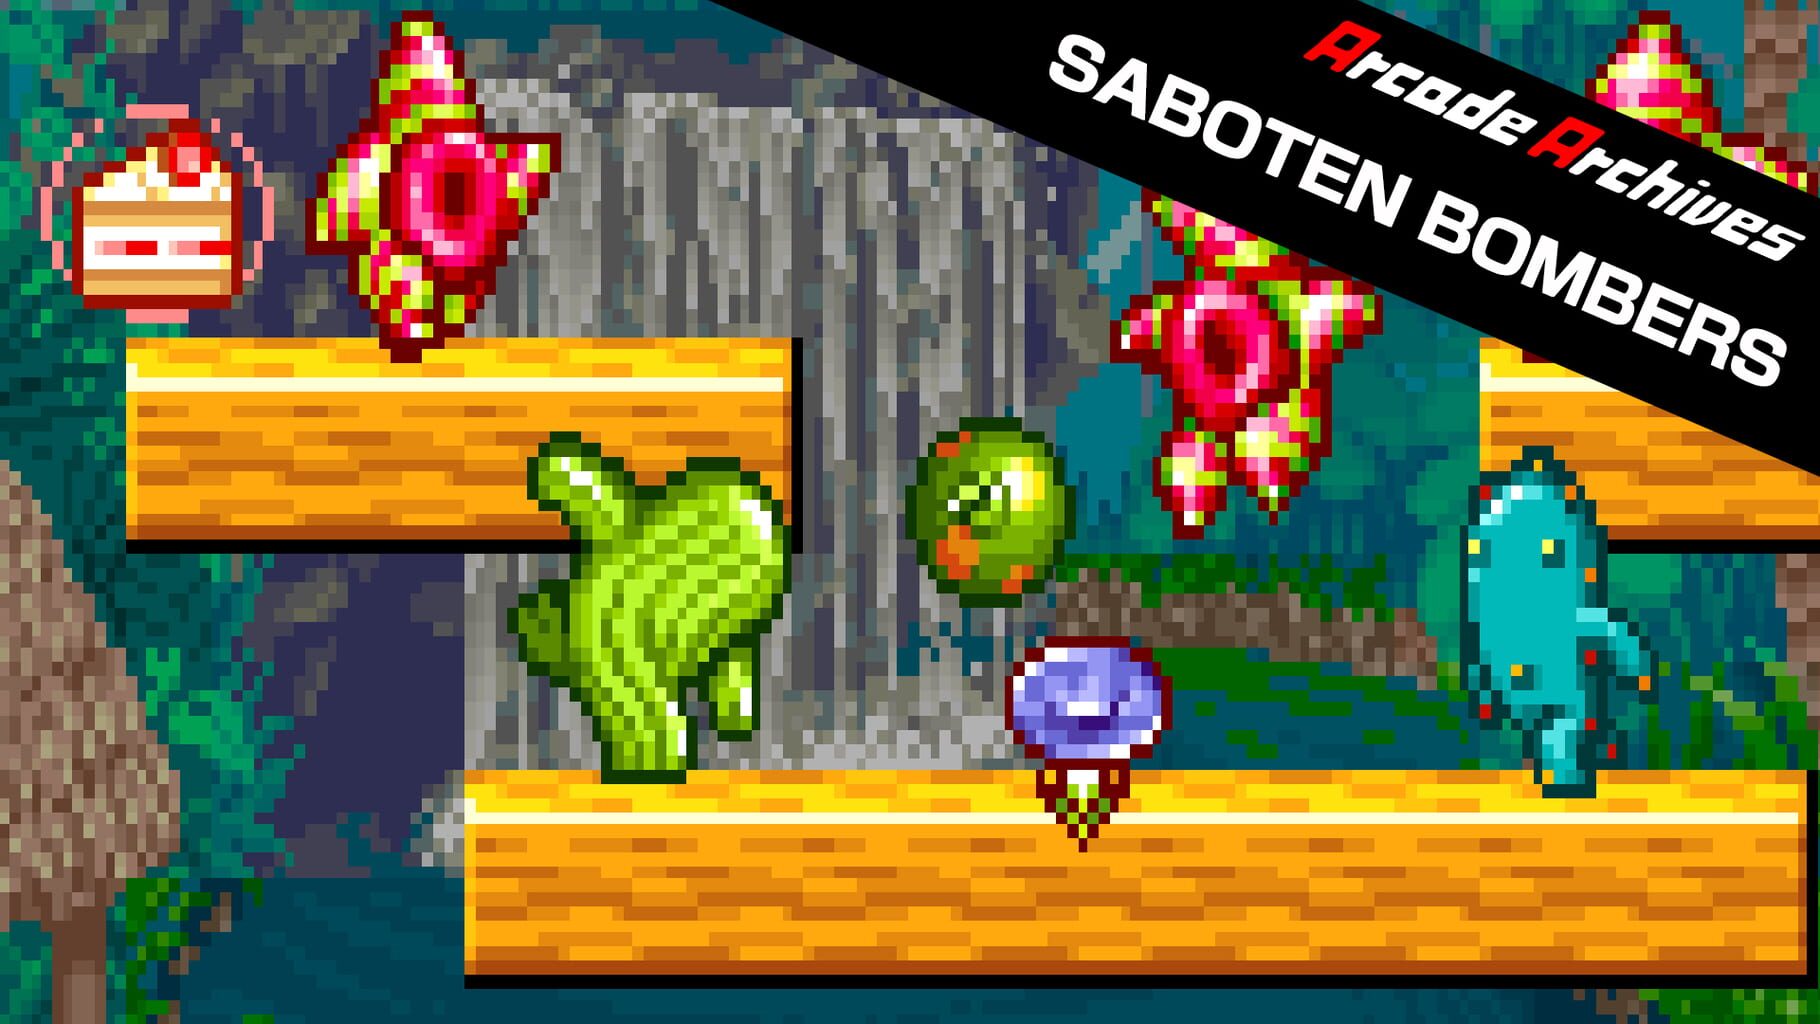 Arcade Archives: Saboten Bombers artwork